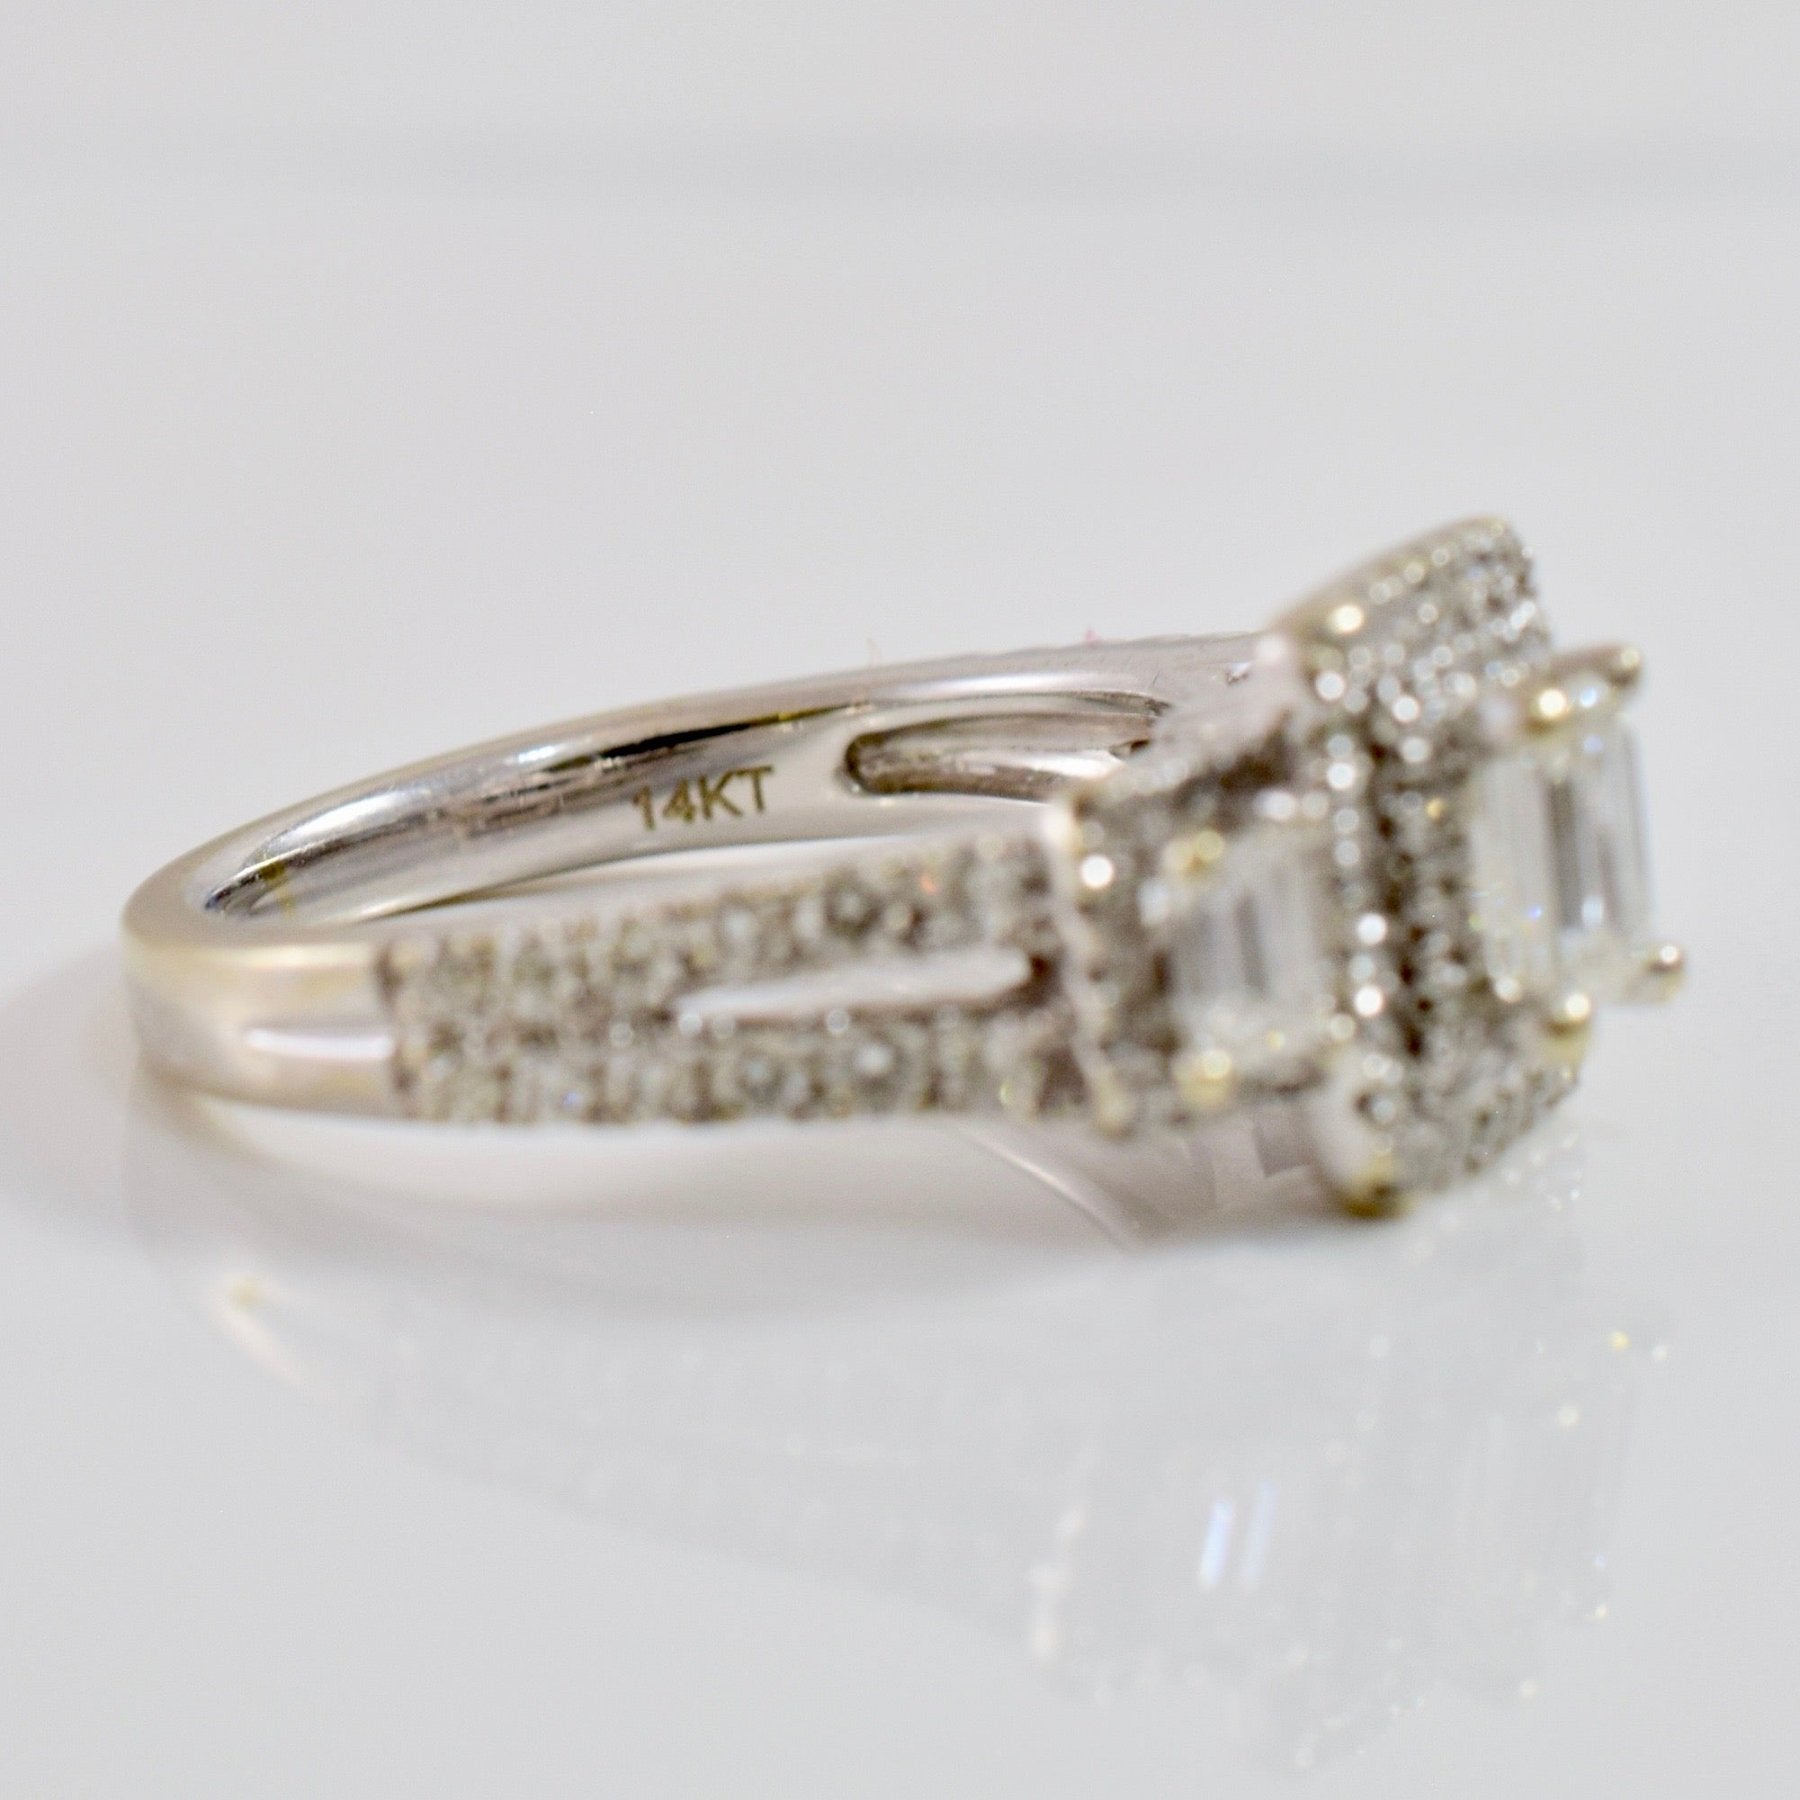 'Vera Wang' Love Collection Diamond Engagement Ring | 1.15 ctw SZ 5.5 | - 100 Ways